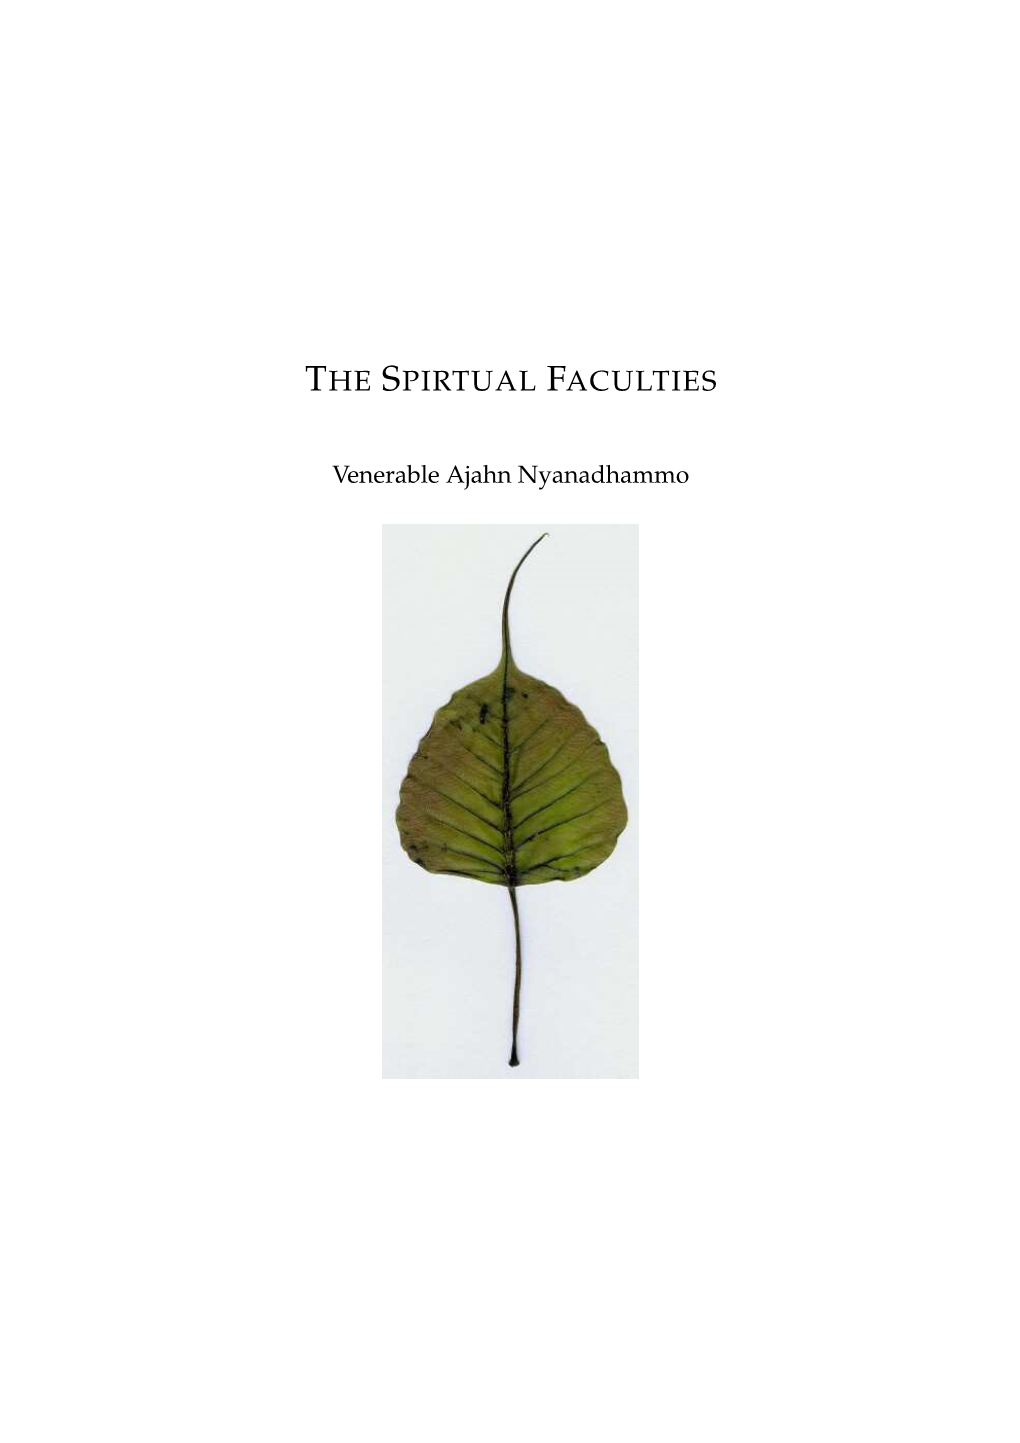 The Spiritual Faculties by Venerable Ajahn Nyanadhammo